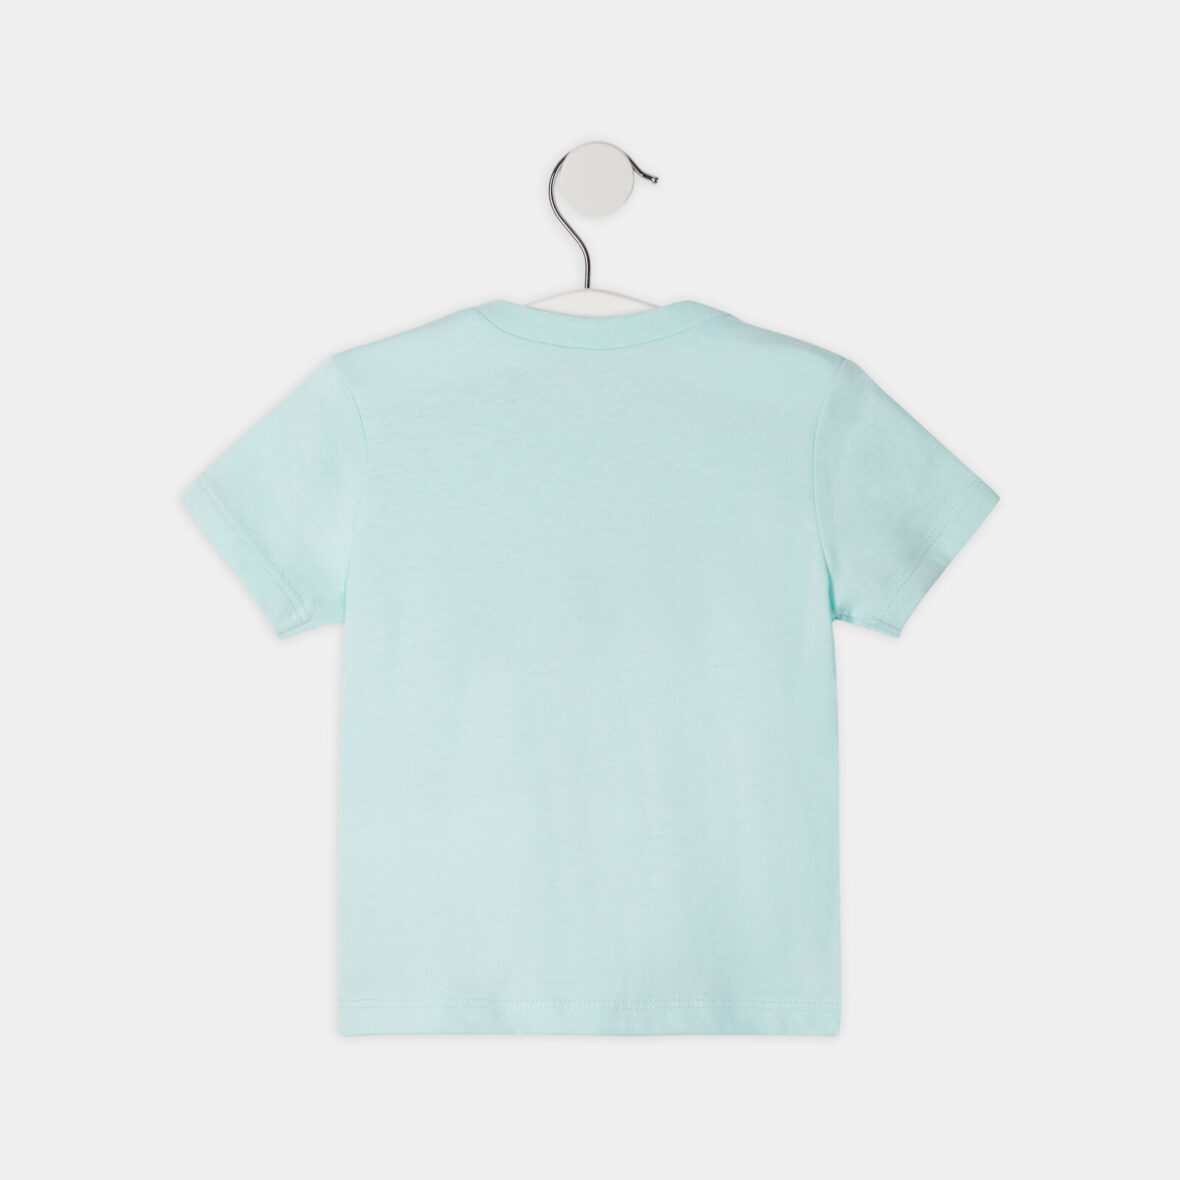 t-shirt-a-manches-courtes-vert-turquoise-bebeg-vue2-36165600762783114